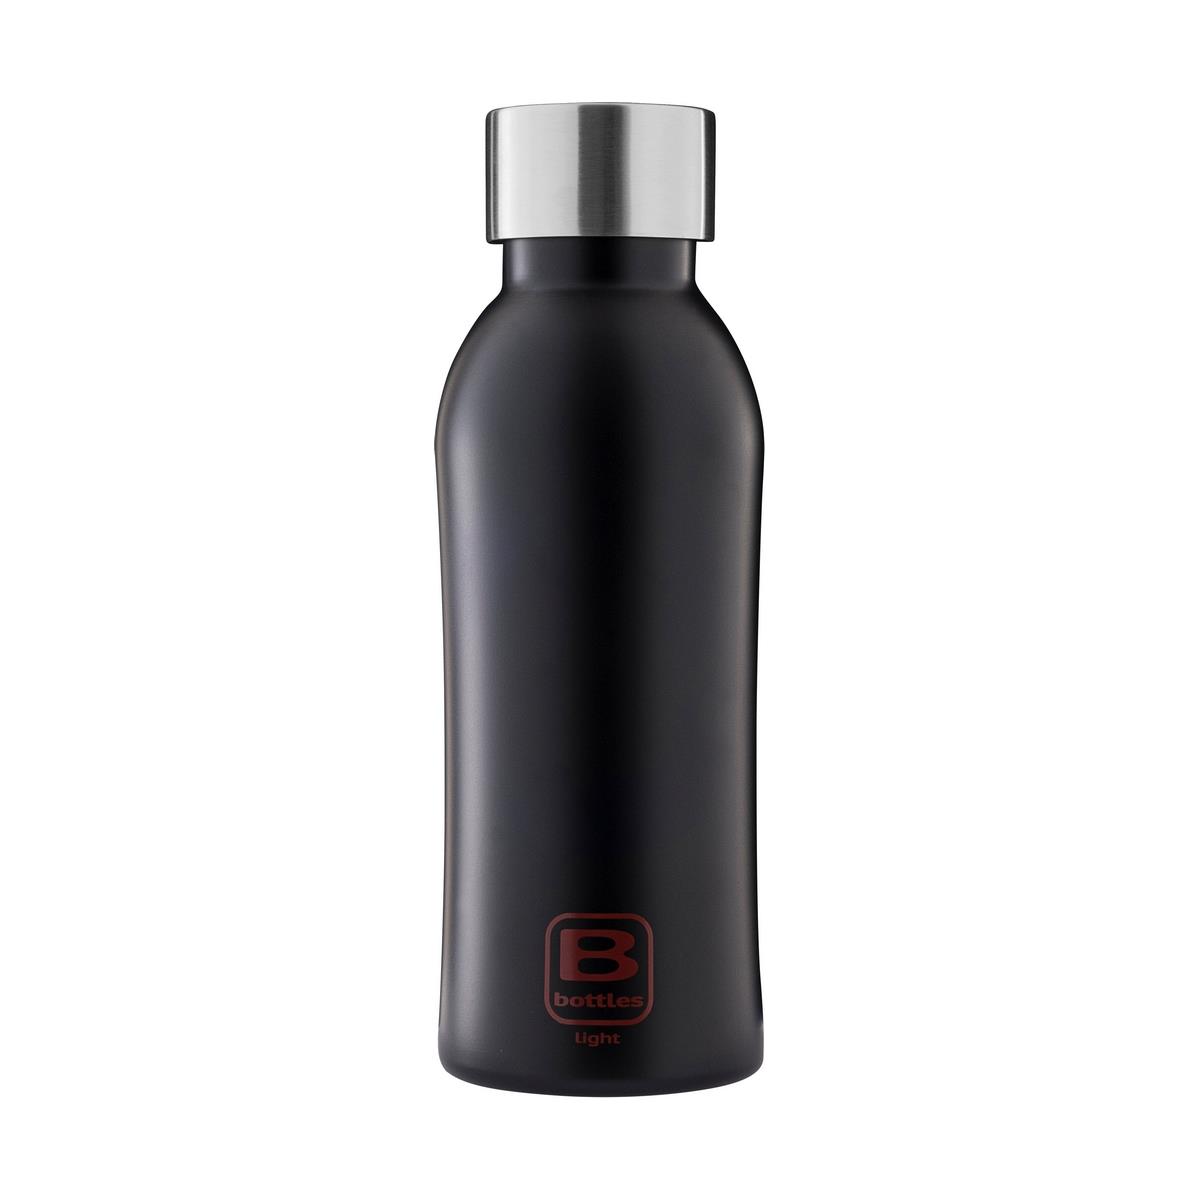 photo B Bottles Light - Nero Opaco - 530 ml - Bottiglia in acciaio inox 18/10 ultra leggera e compatta